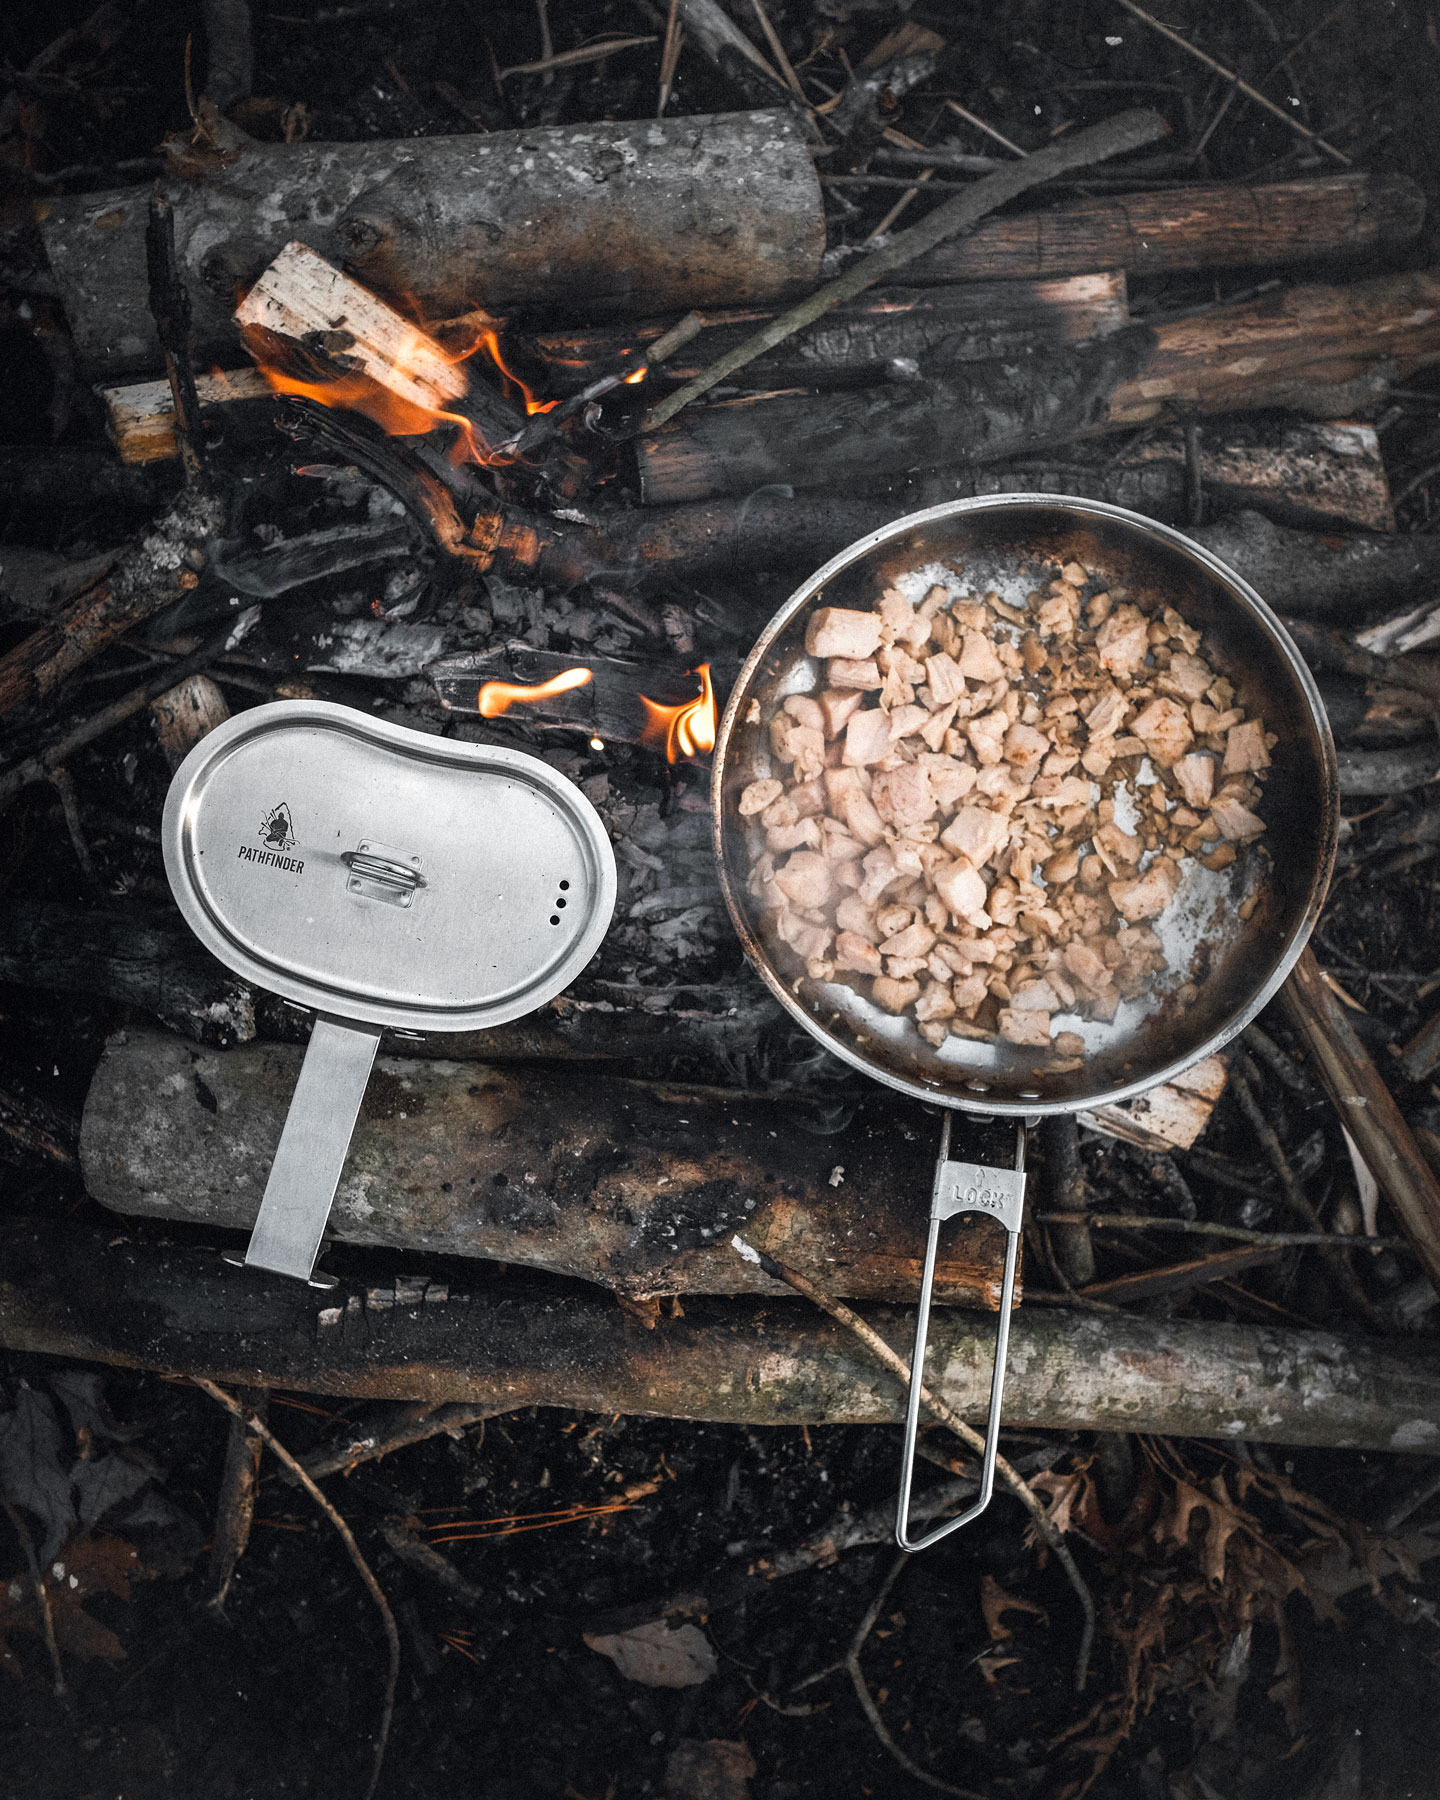 https://anthonyawaken.com/wp-content/uploads/2019/01/pathfinder-campfire-survival-cooking-kit.jpg